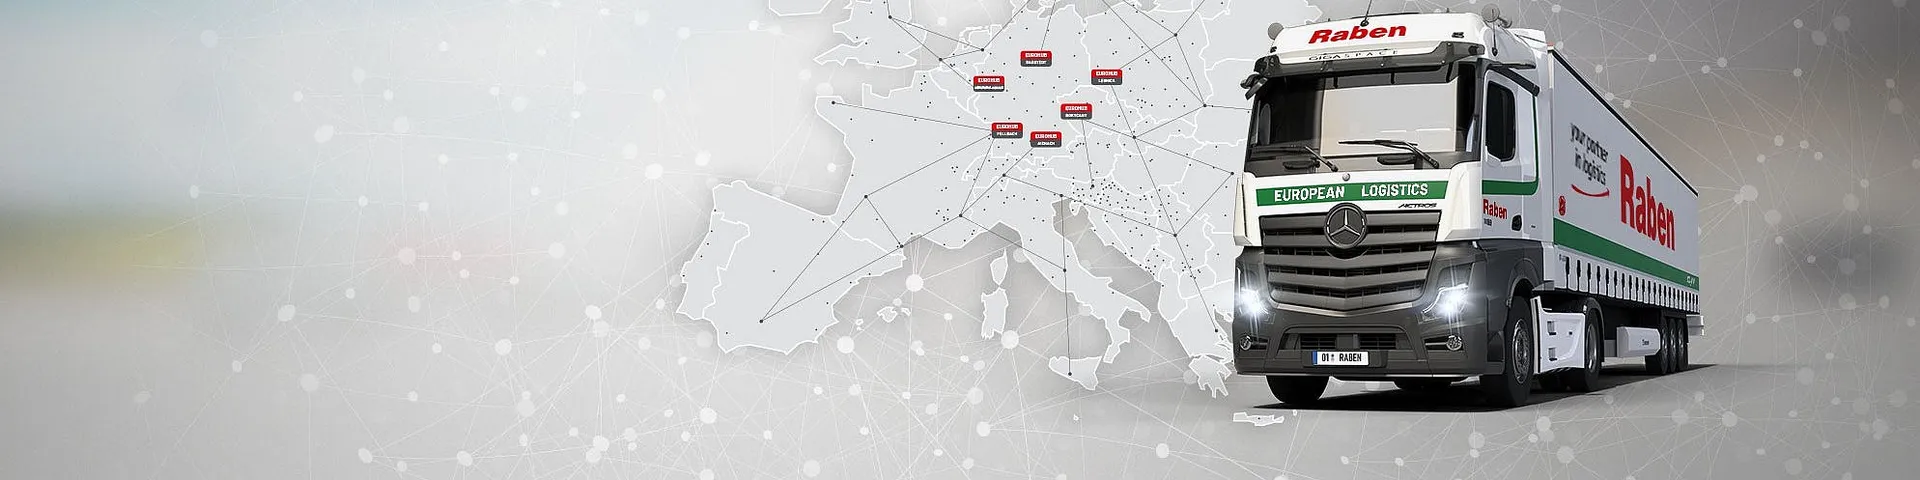 Eurohub Raben Transport International Map of Europe with the 6 Eurohub depots